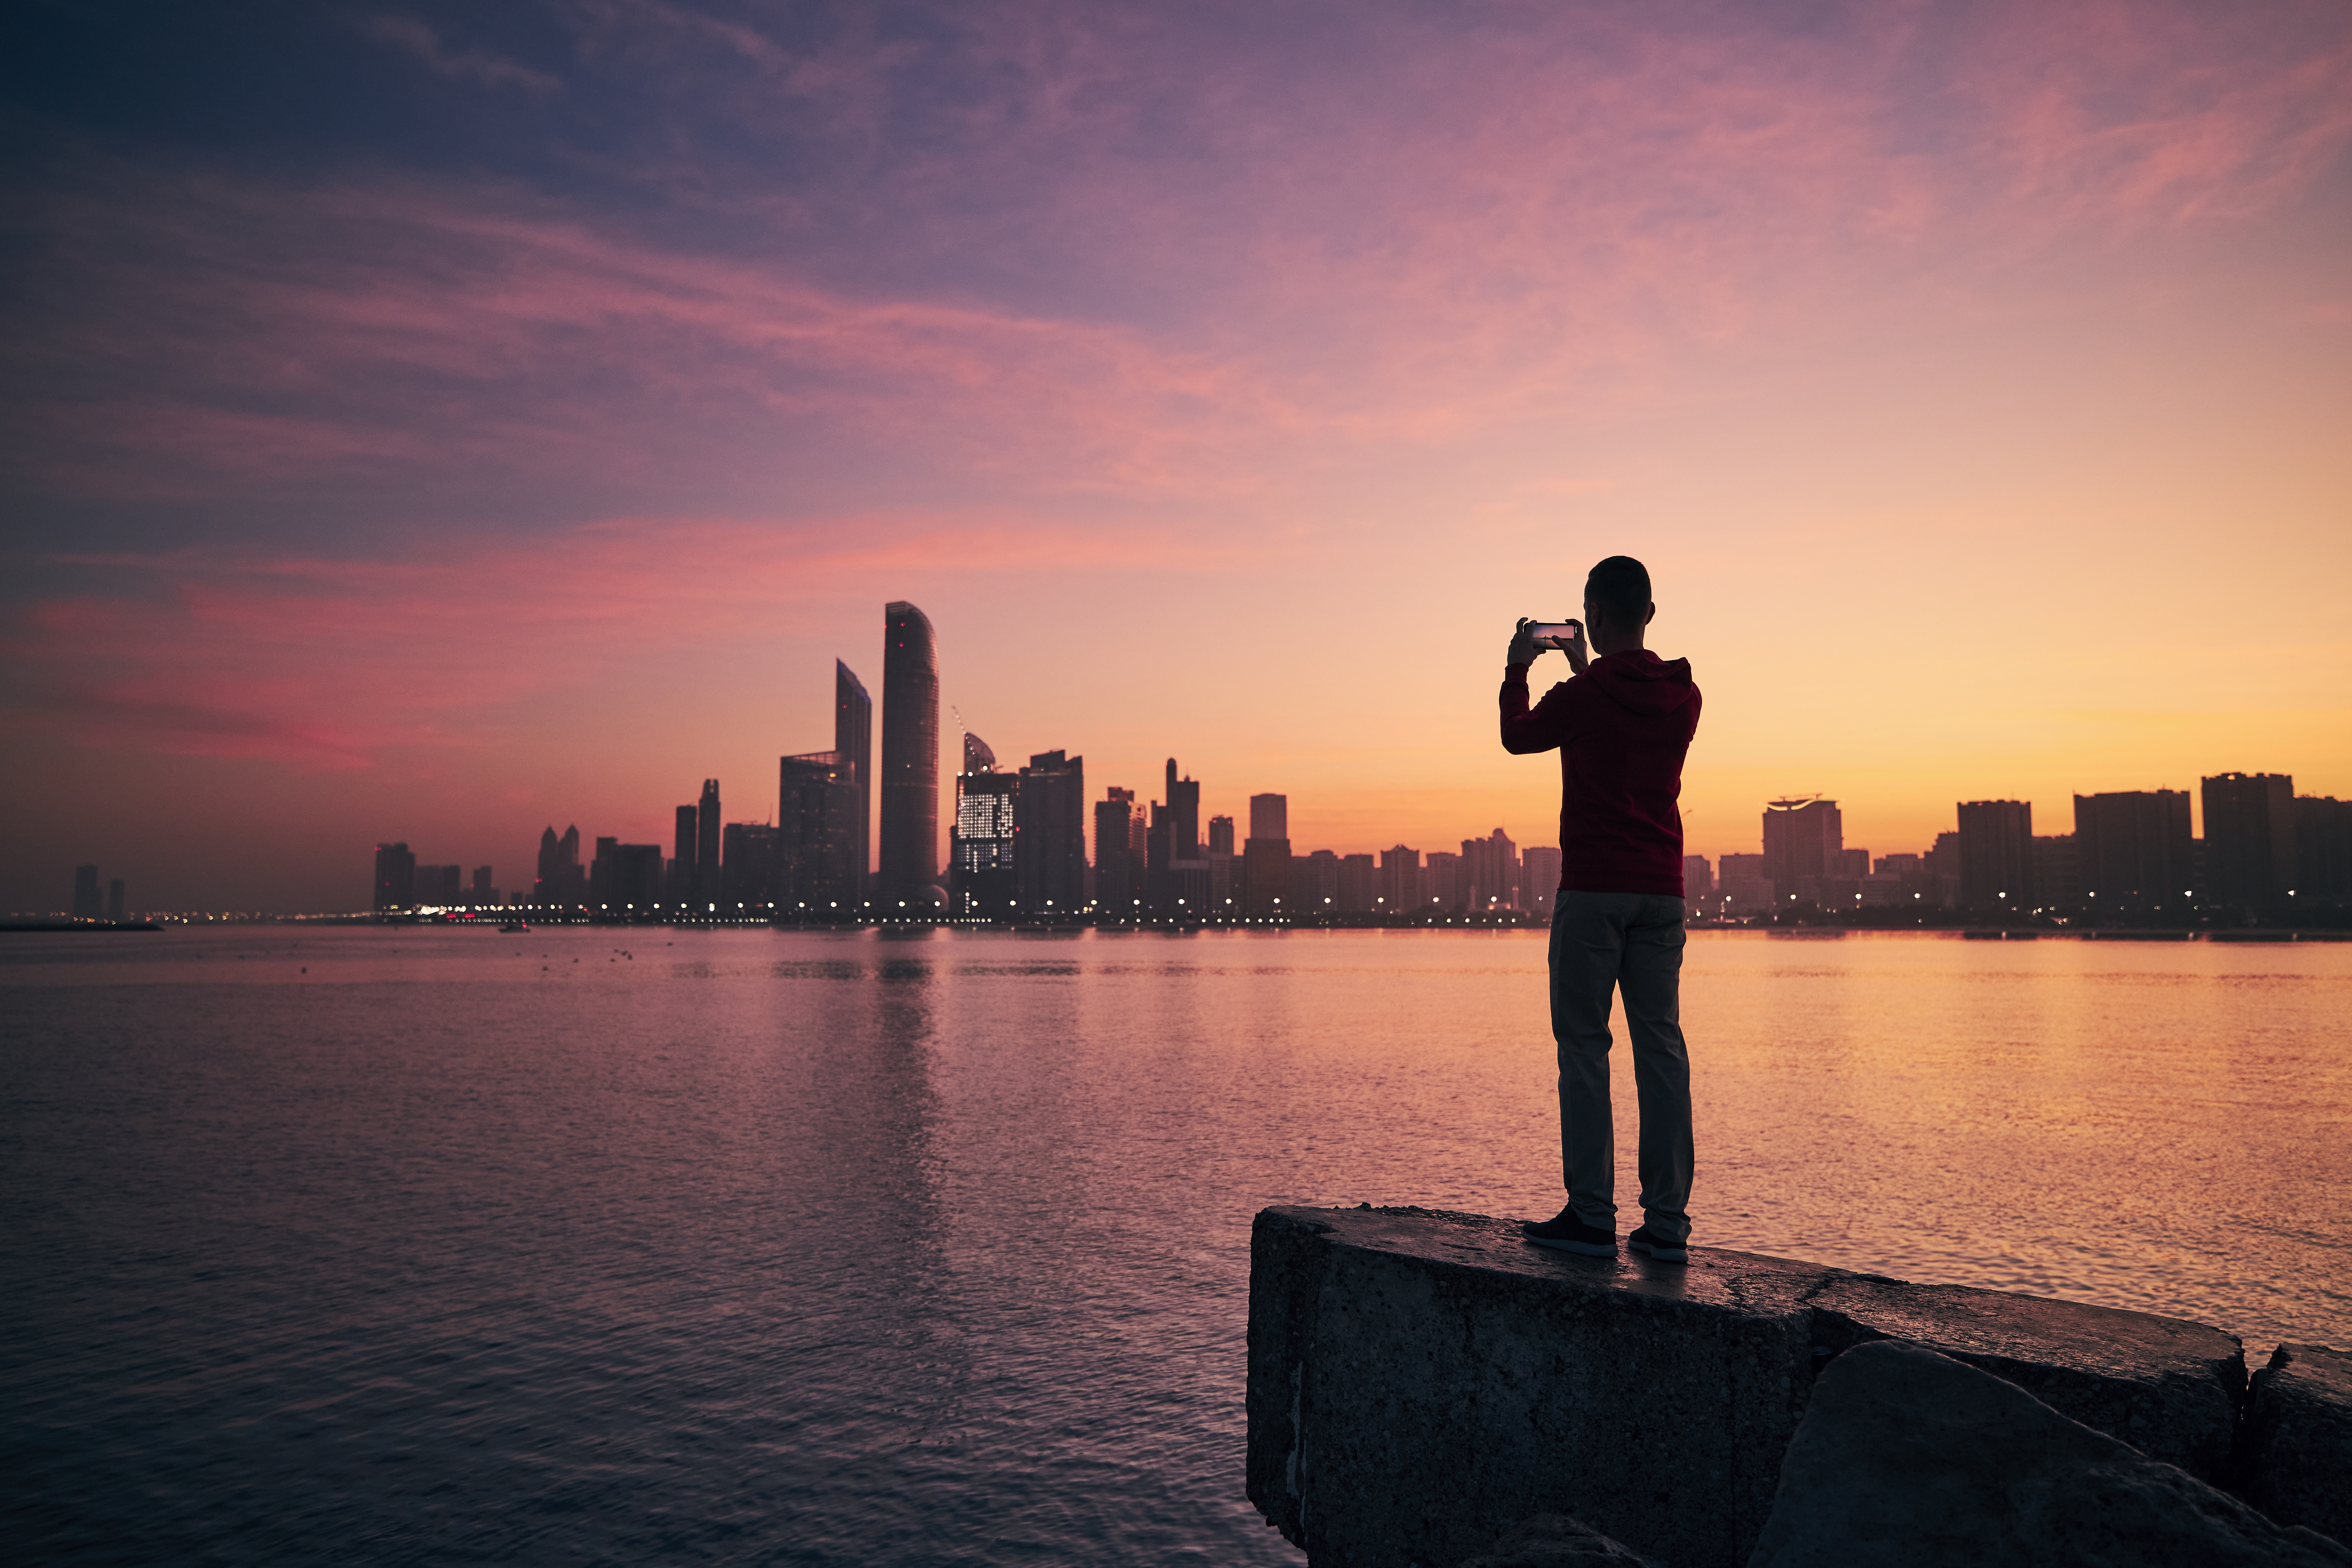 Young man with mobile phone photographing urban skyline at sunrise. Abu Dhabi, United Arab Emirates.